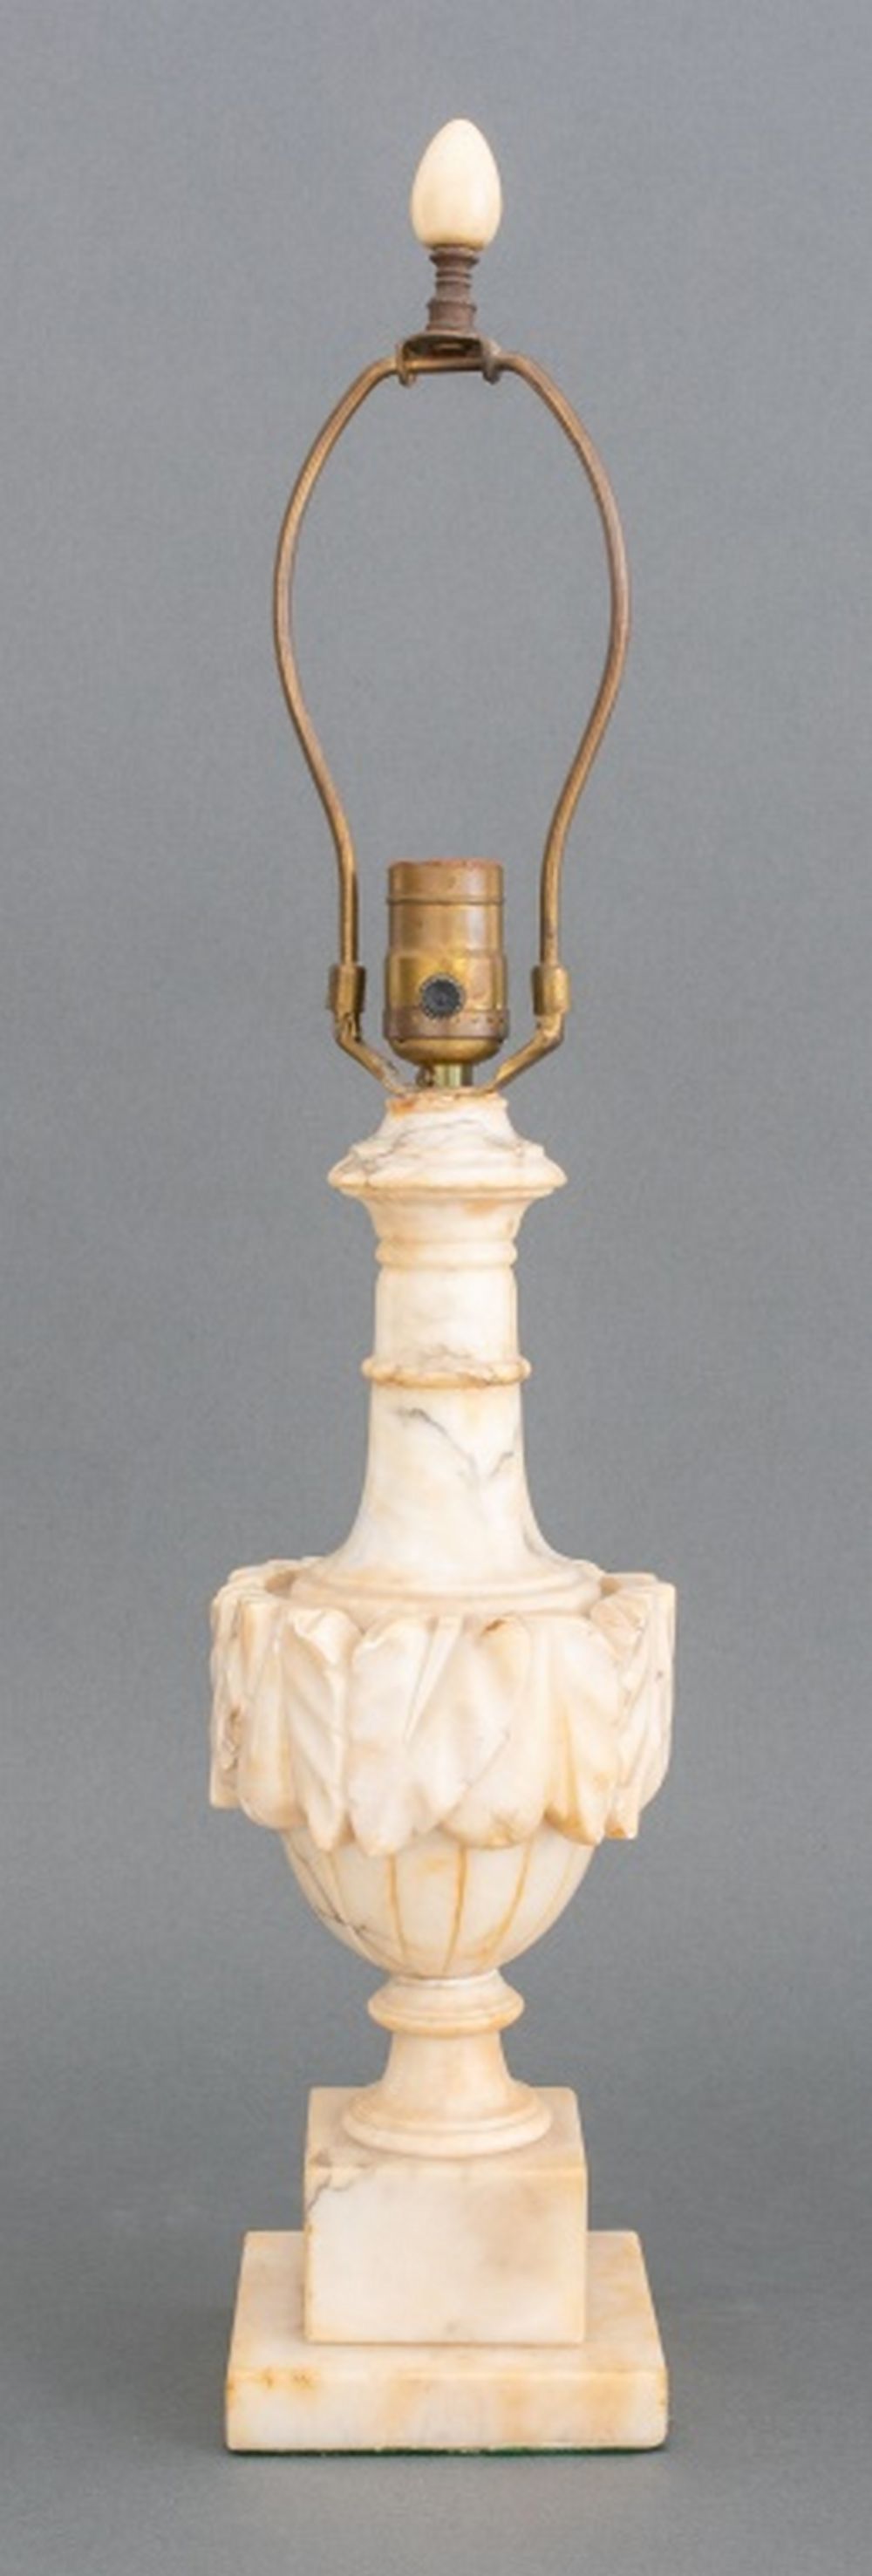 INDIAN ALABASTER LAMP 20TH CENTURY 2fb200